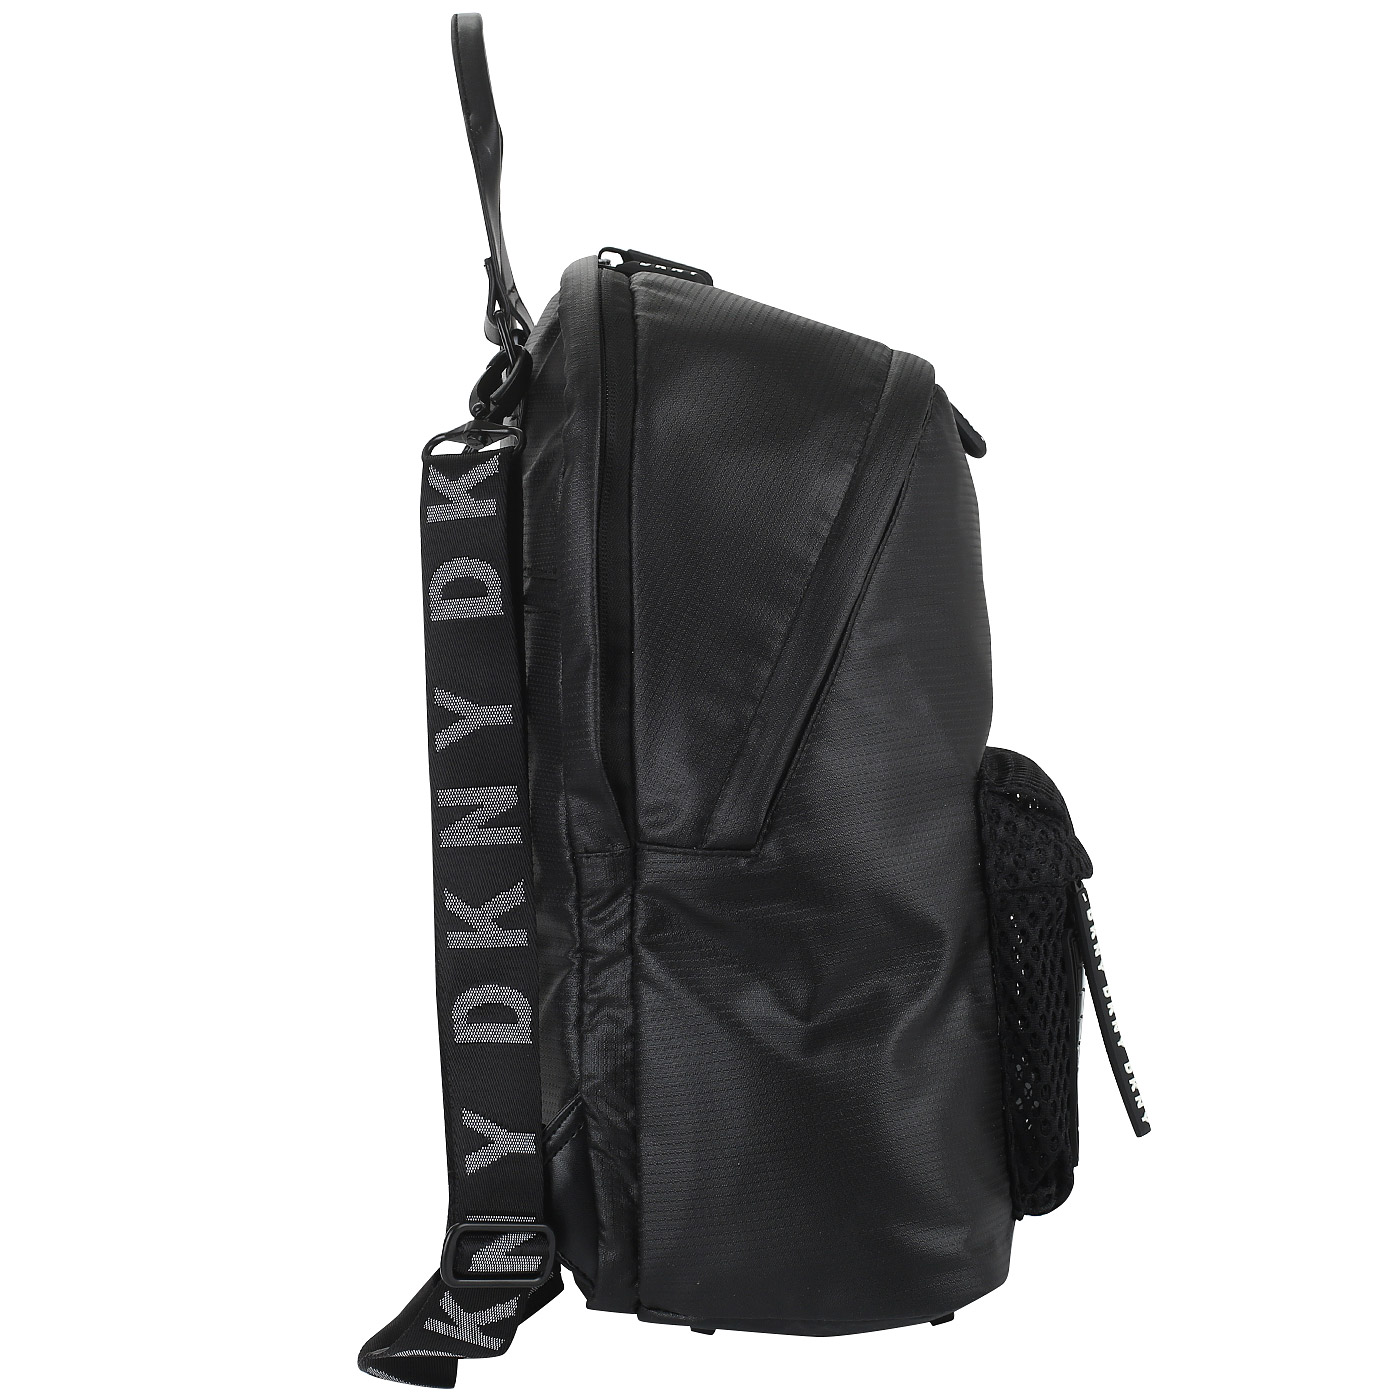 Рюкзак с двумя отделами DKNY DKNY-112 Urban Exlusive